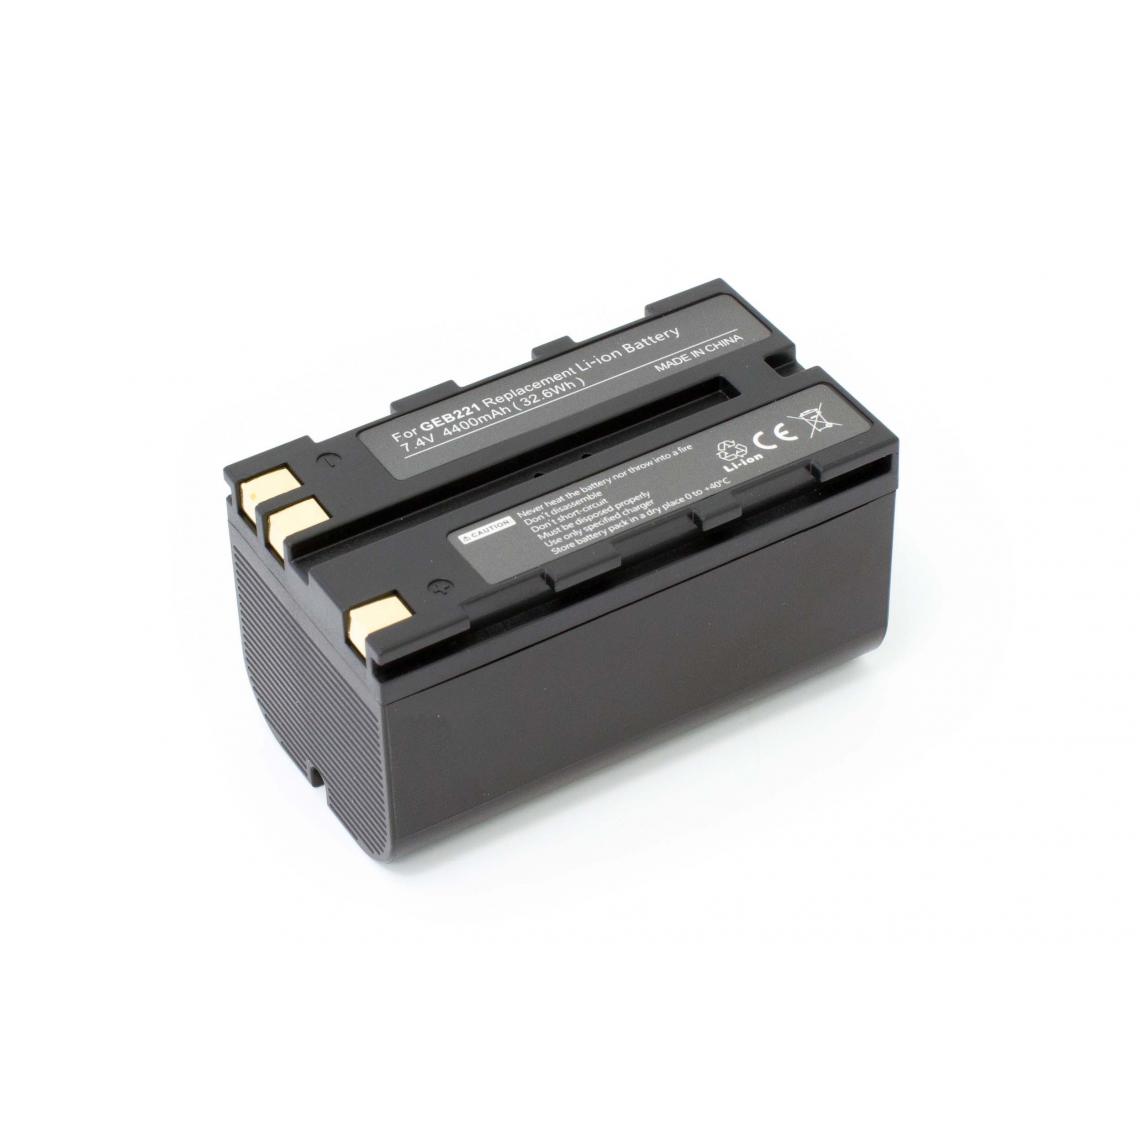 Vhbw - vhbw Batterie compatible avec Leica TPS1100, TPS1200, TPS300 dispositif de mesure laser, outil de mesure (4400mAh, 7,4V, Li-ion) - Piles rechargeables